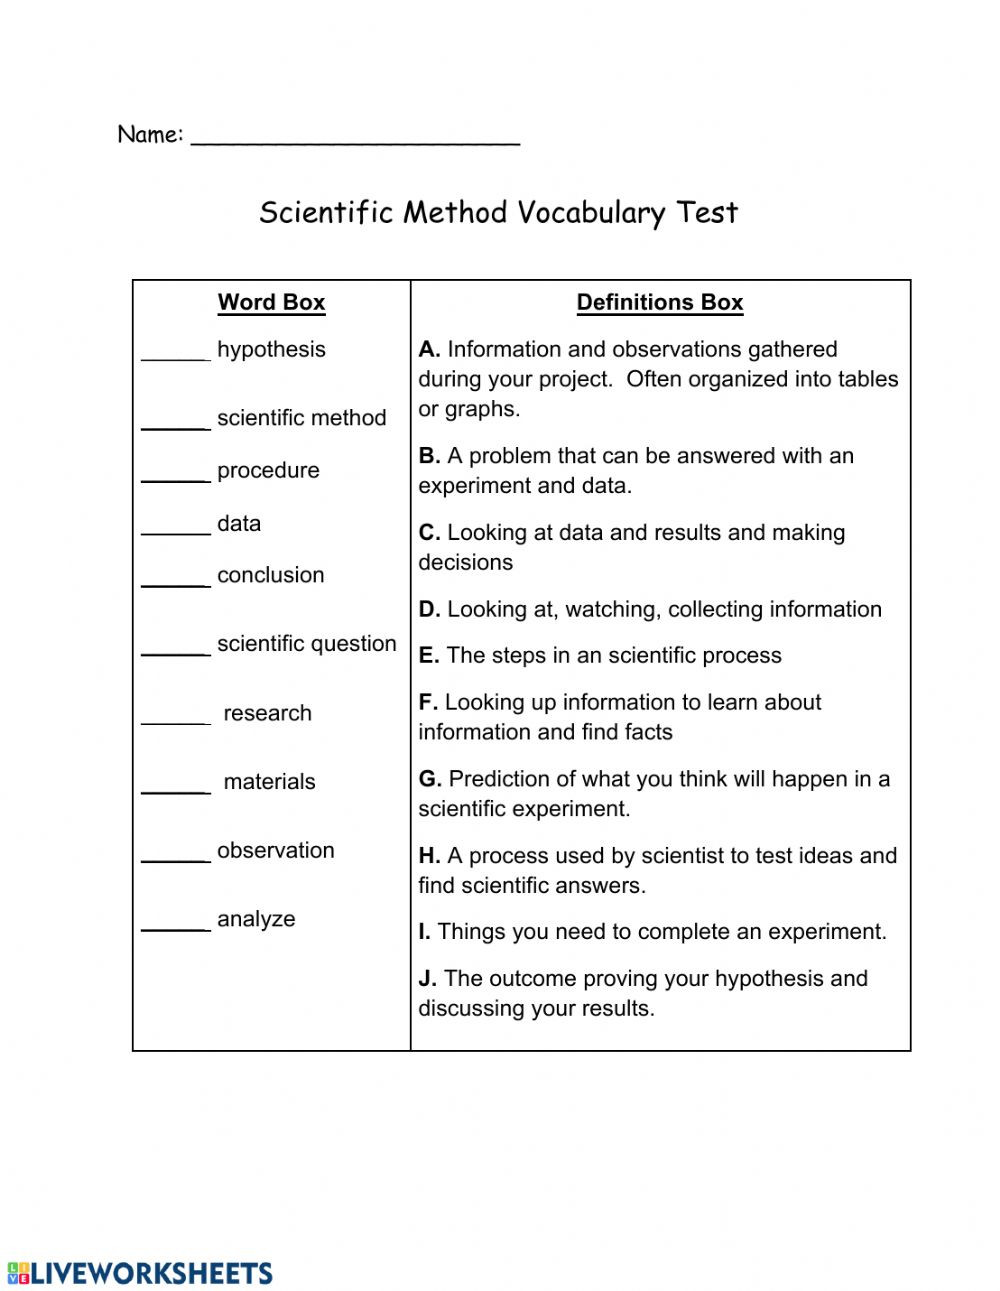 Scientific Method Worksheet Answers Scientific Process Vocabulary Test Interactive Worksheet